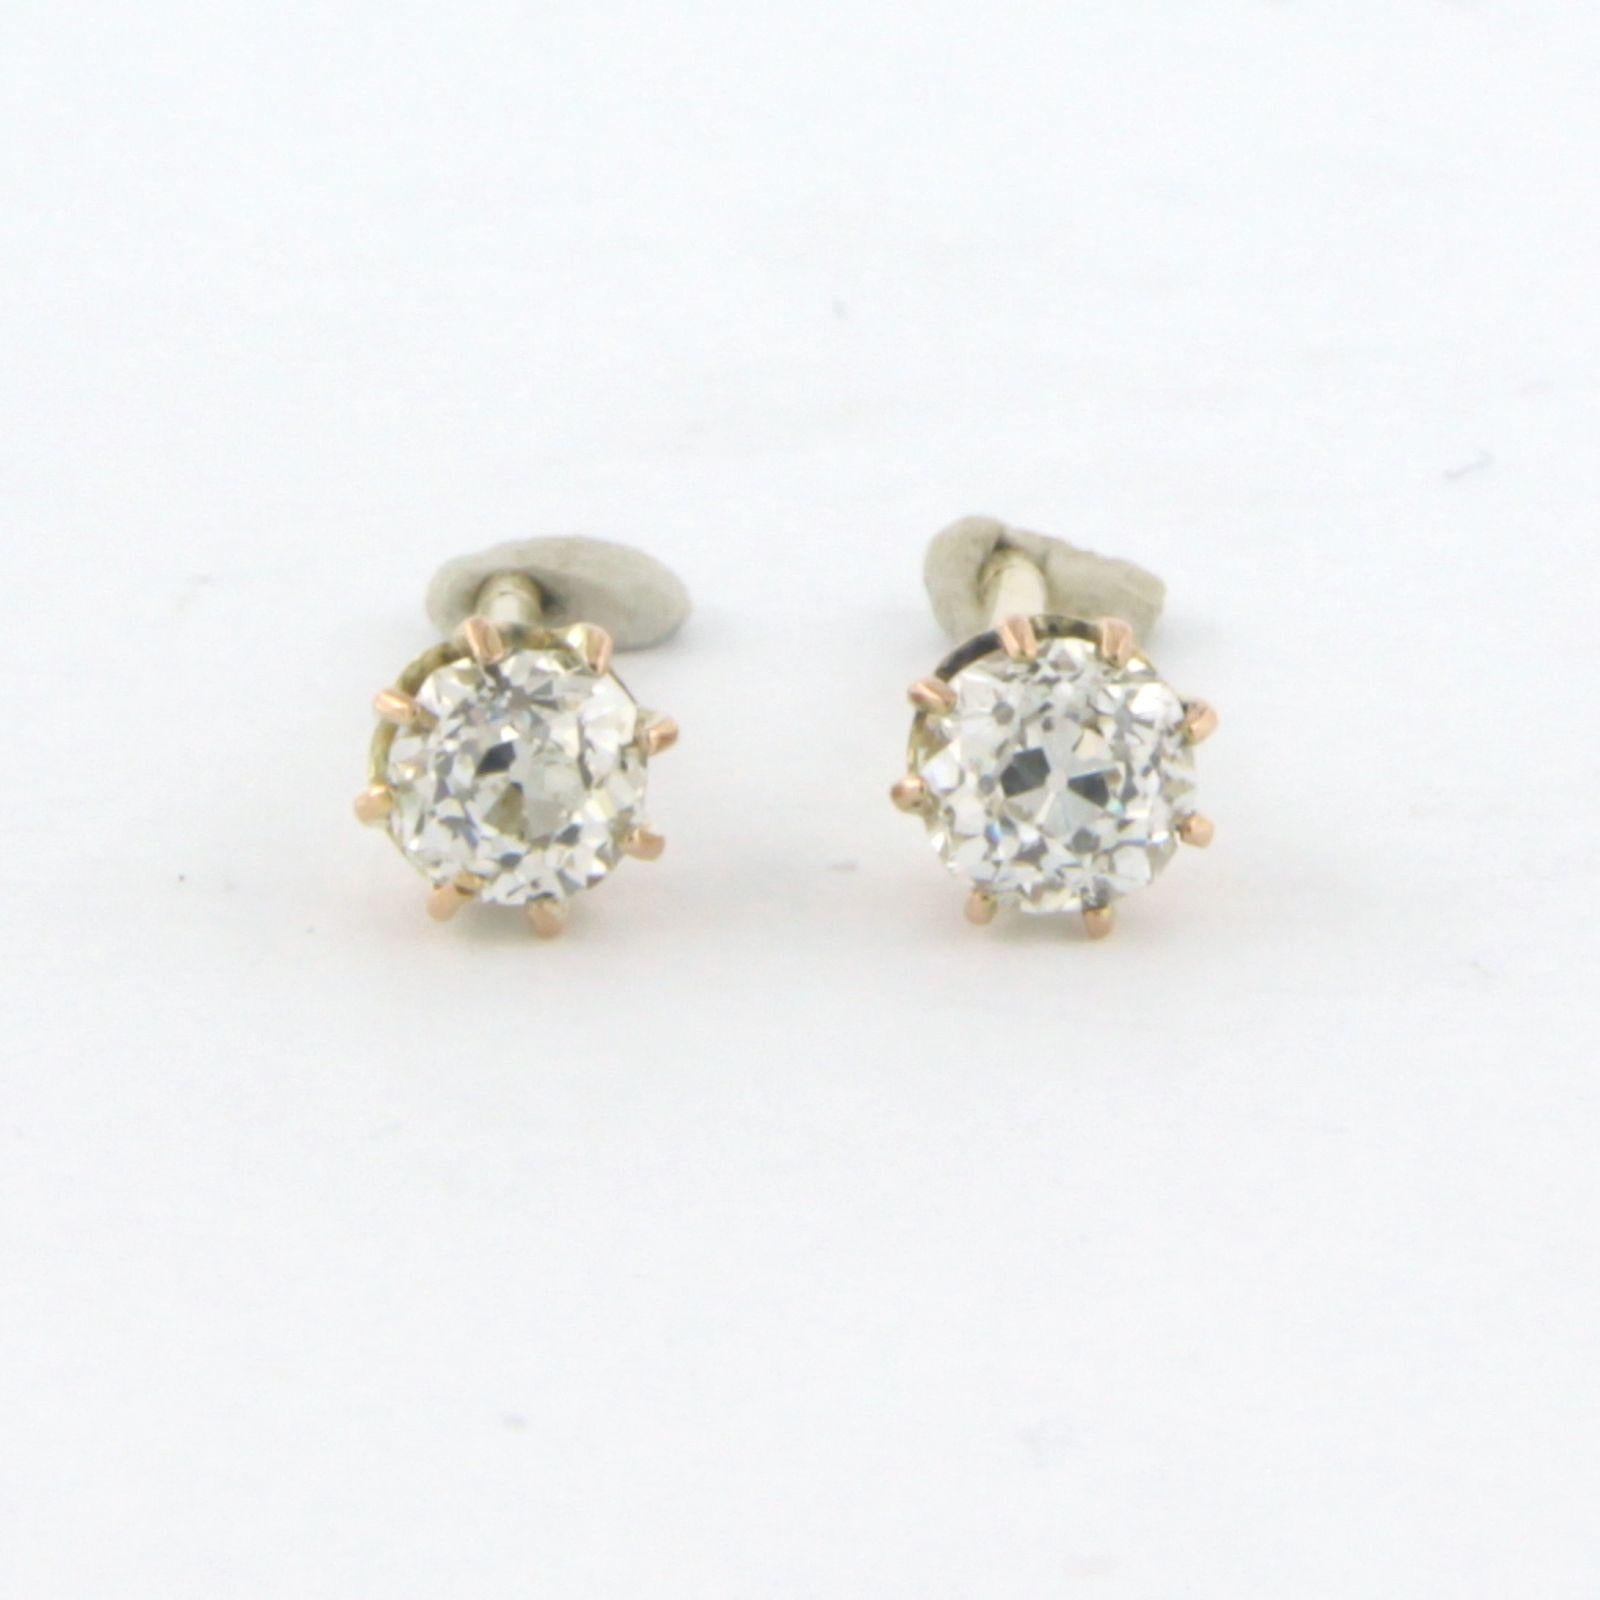 Earring studs set with diamonds 18k yellow gold 1